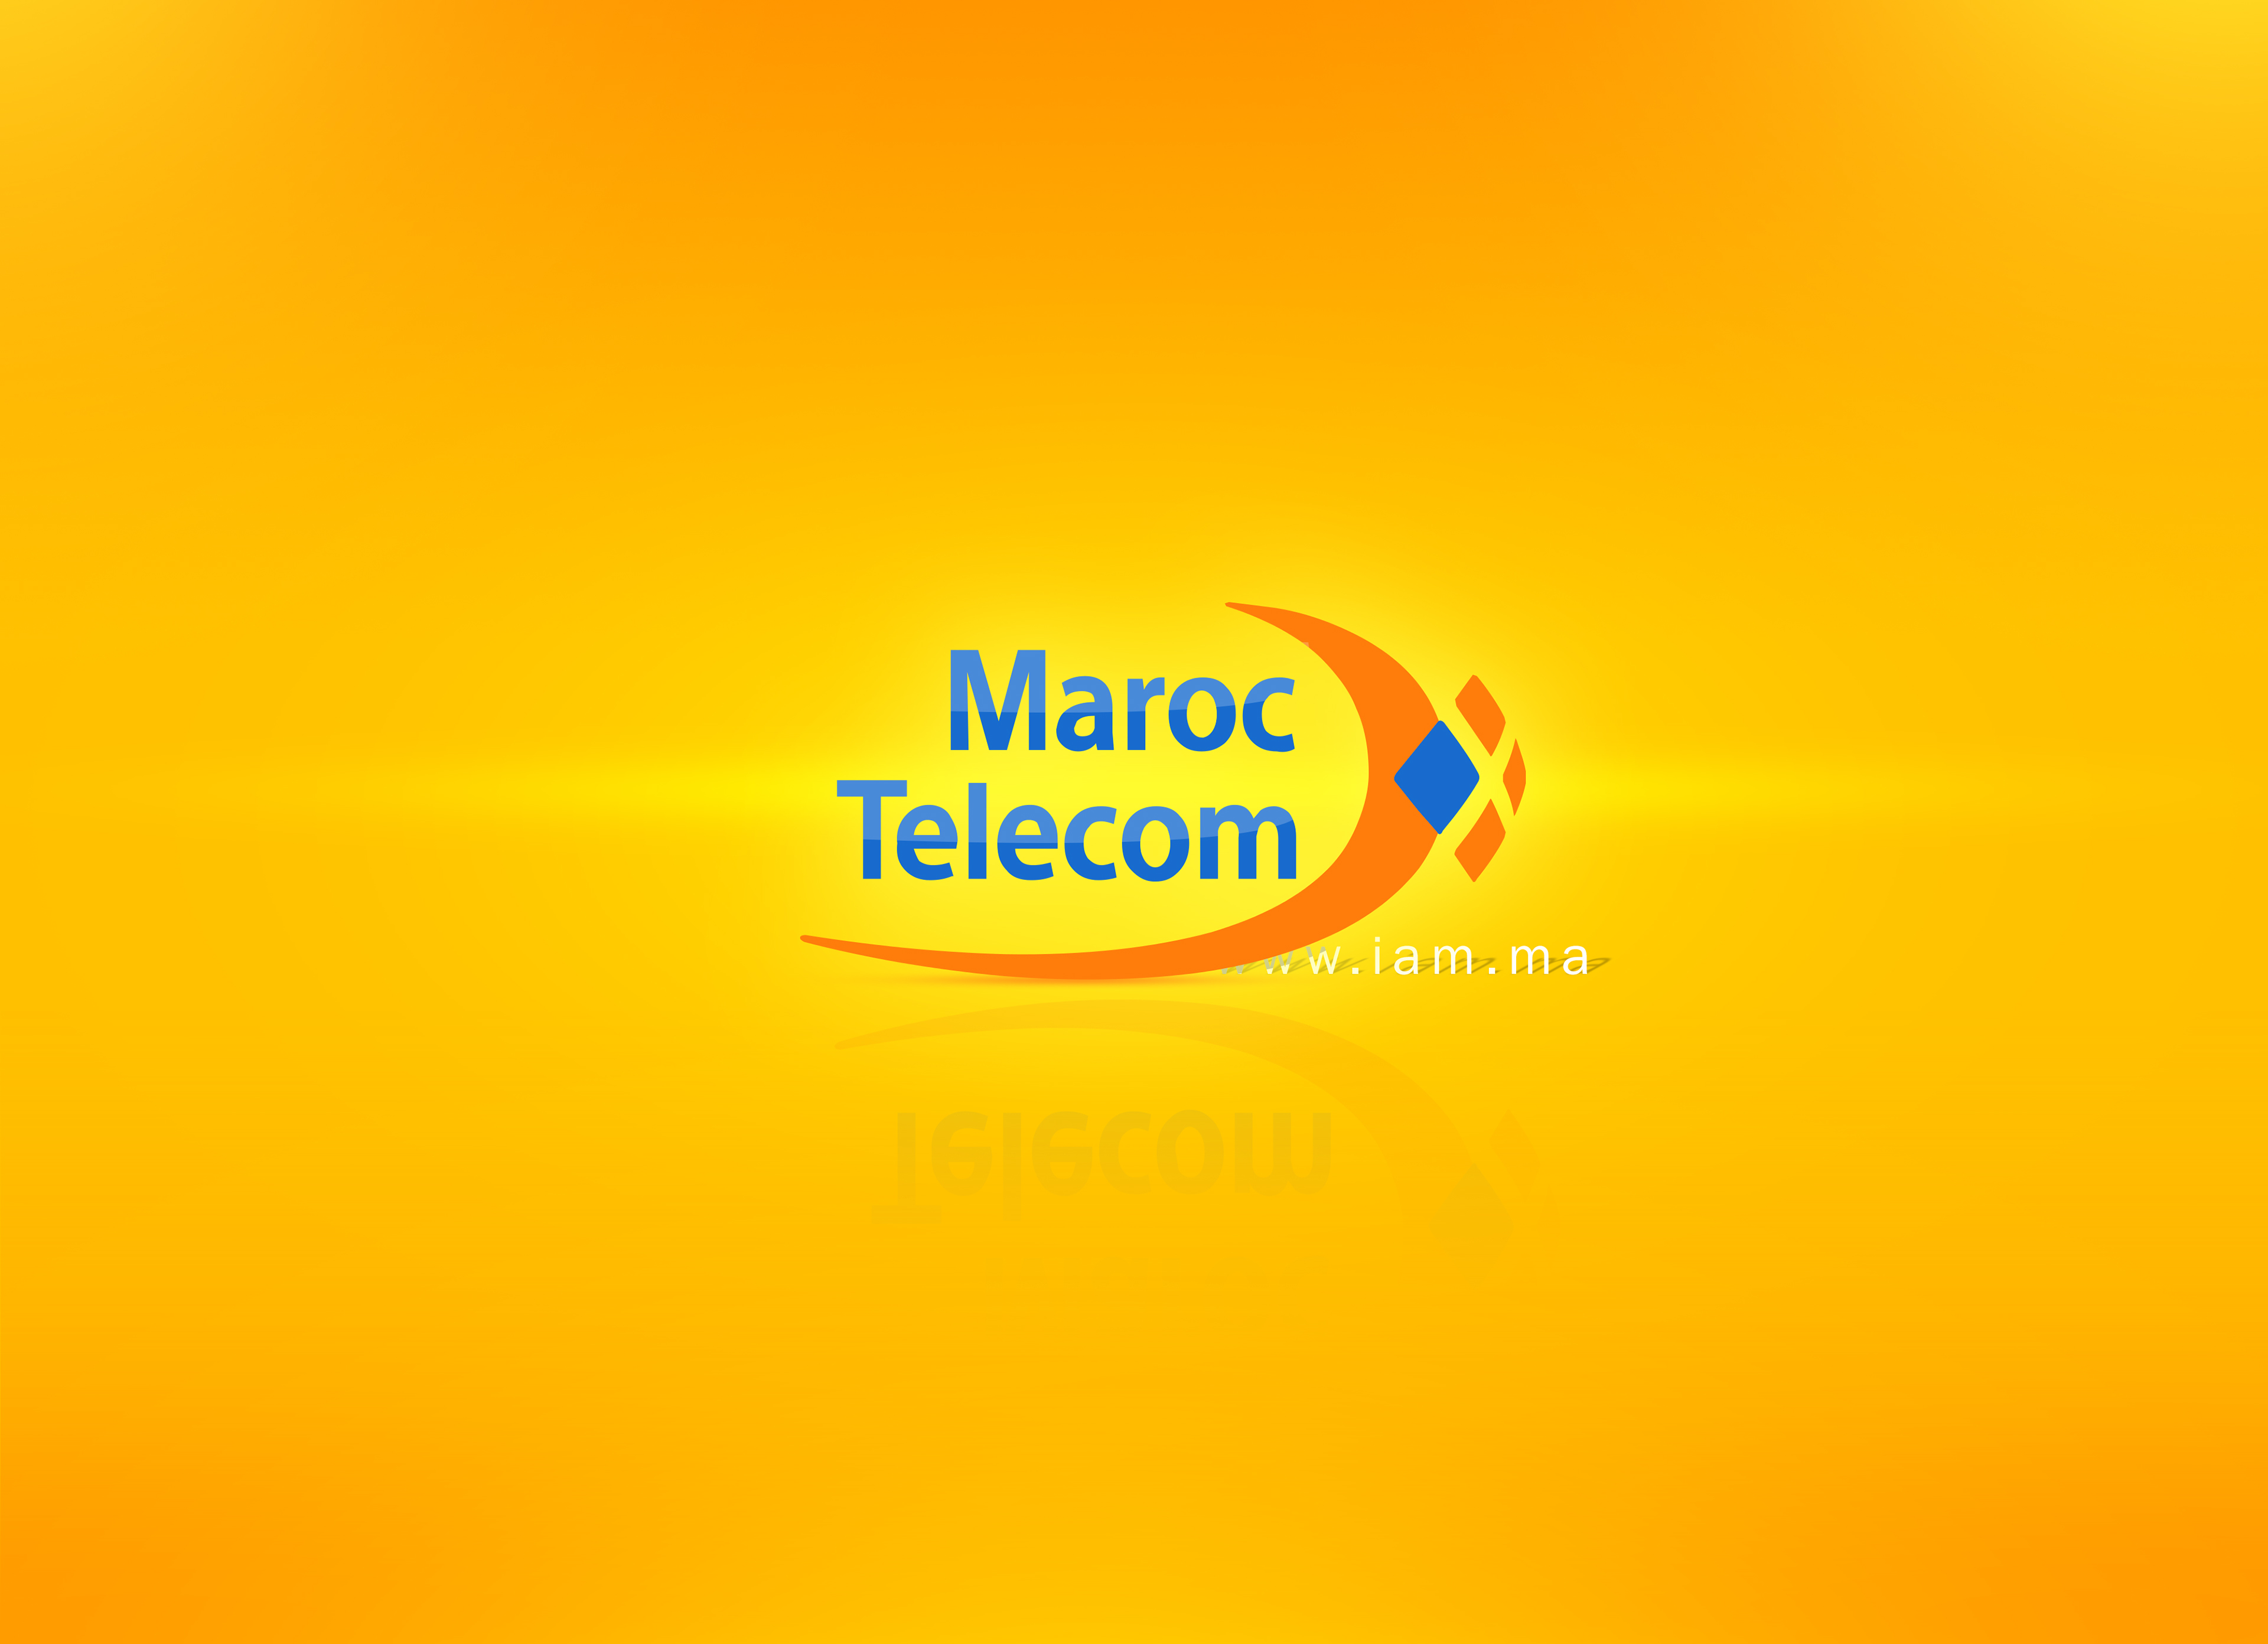 Maroc Telecom 4G on Behance